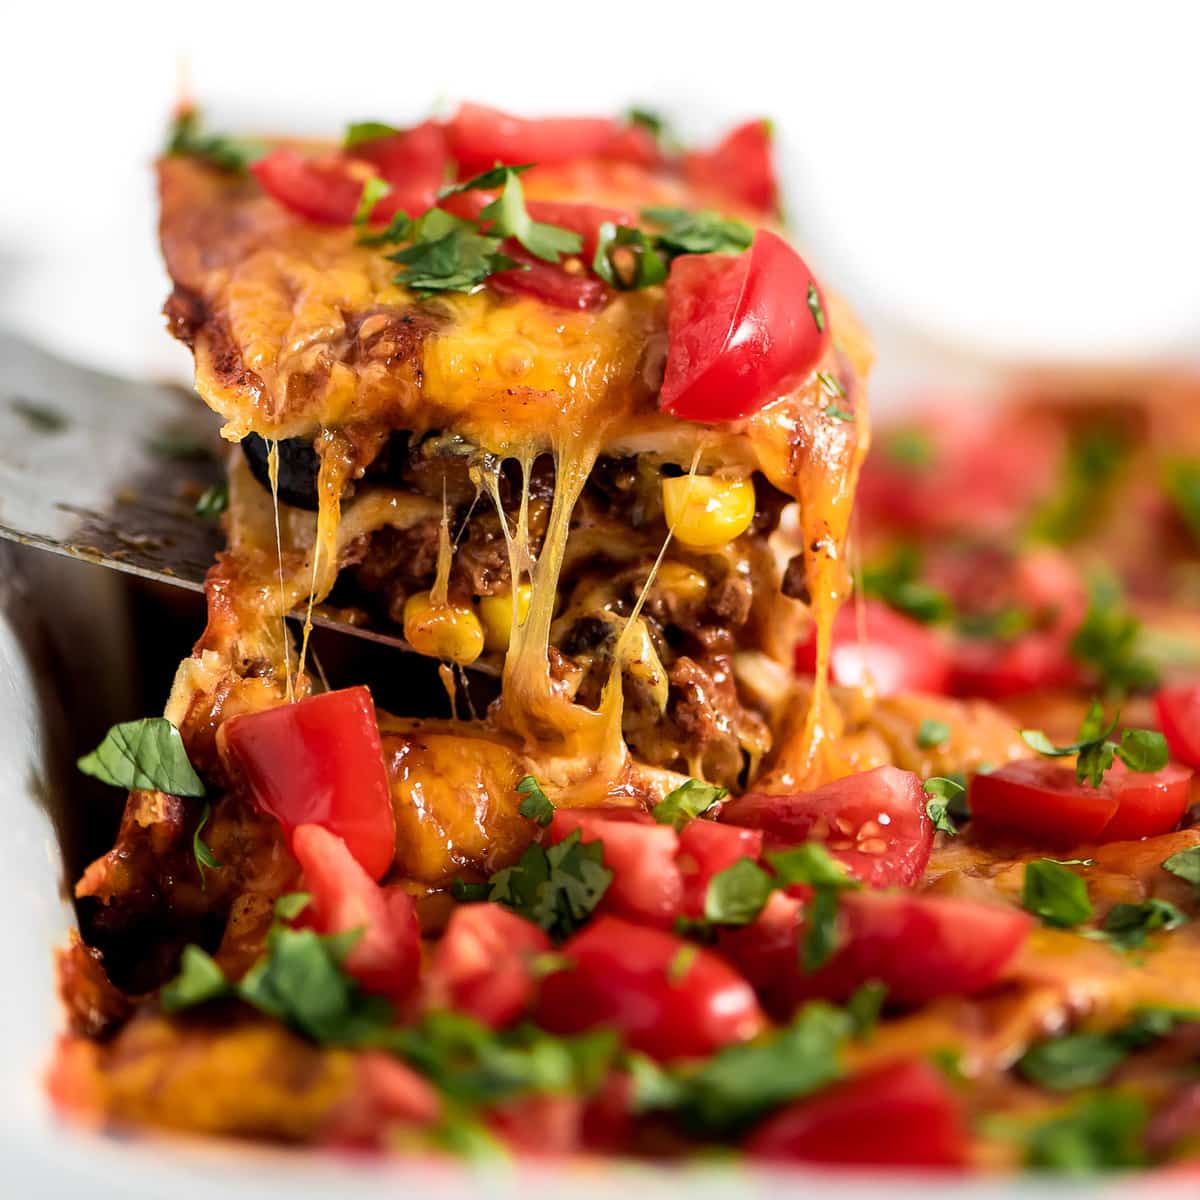 Easy Dinner Ideas - Enchilada casserole being served on a metal spatula.